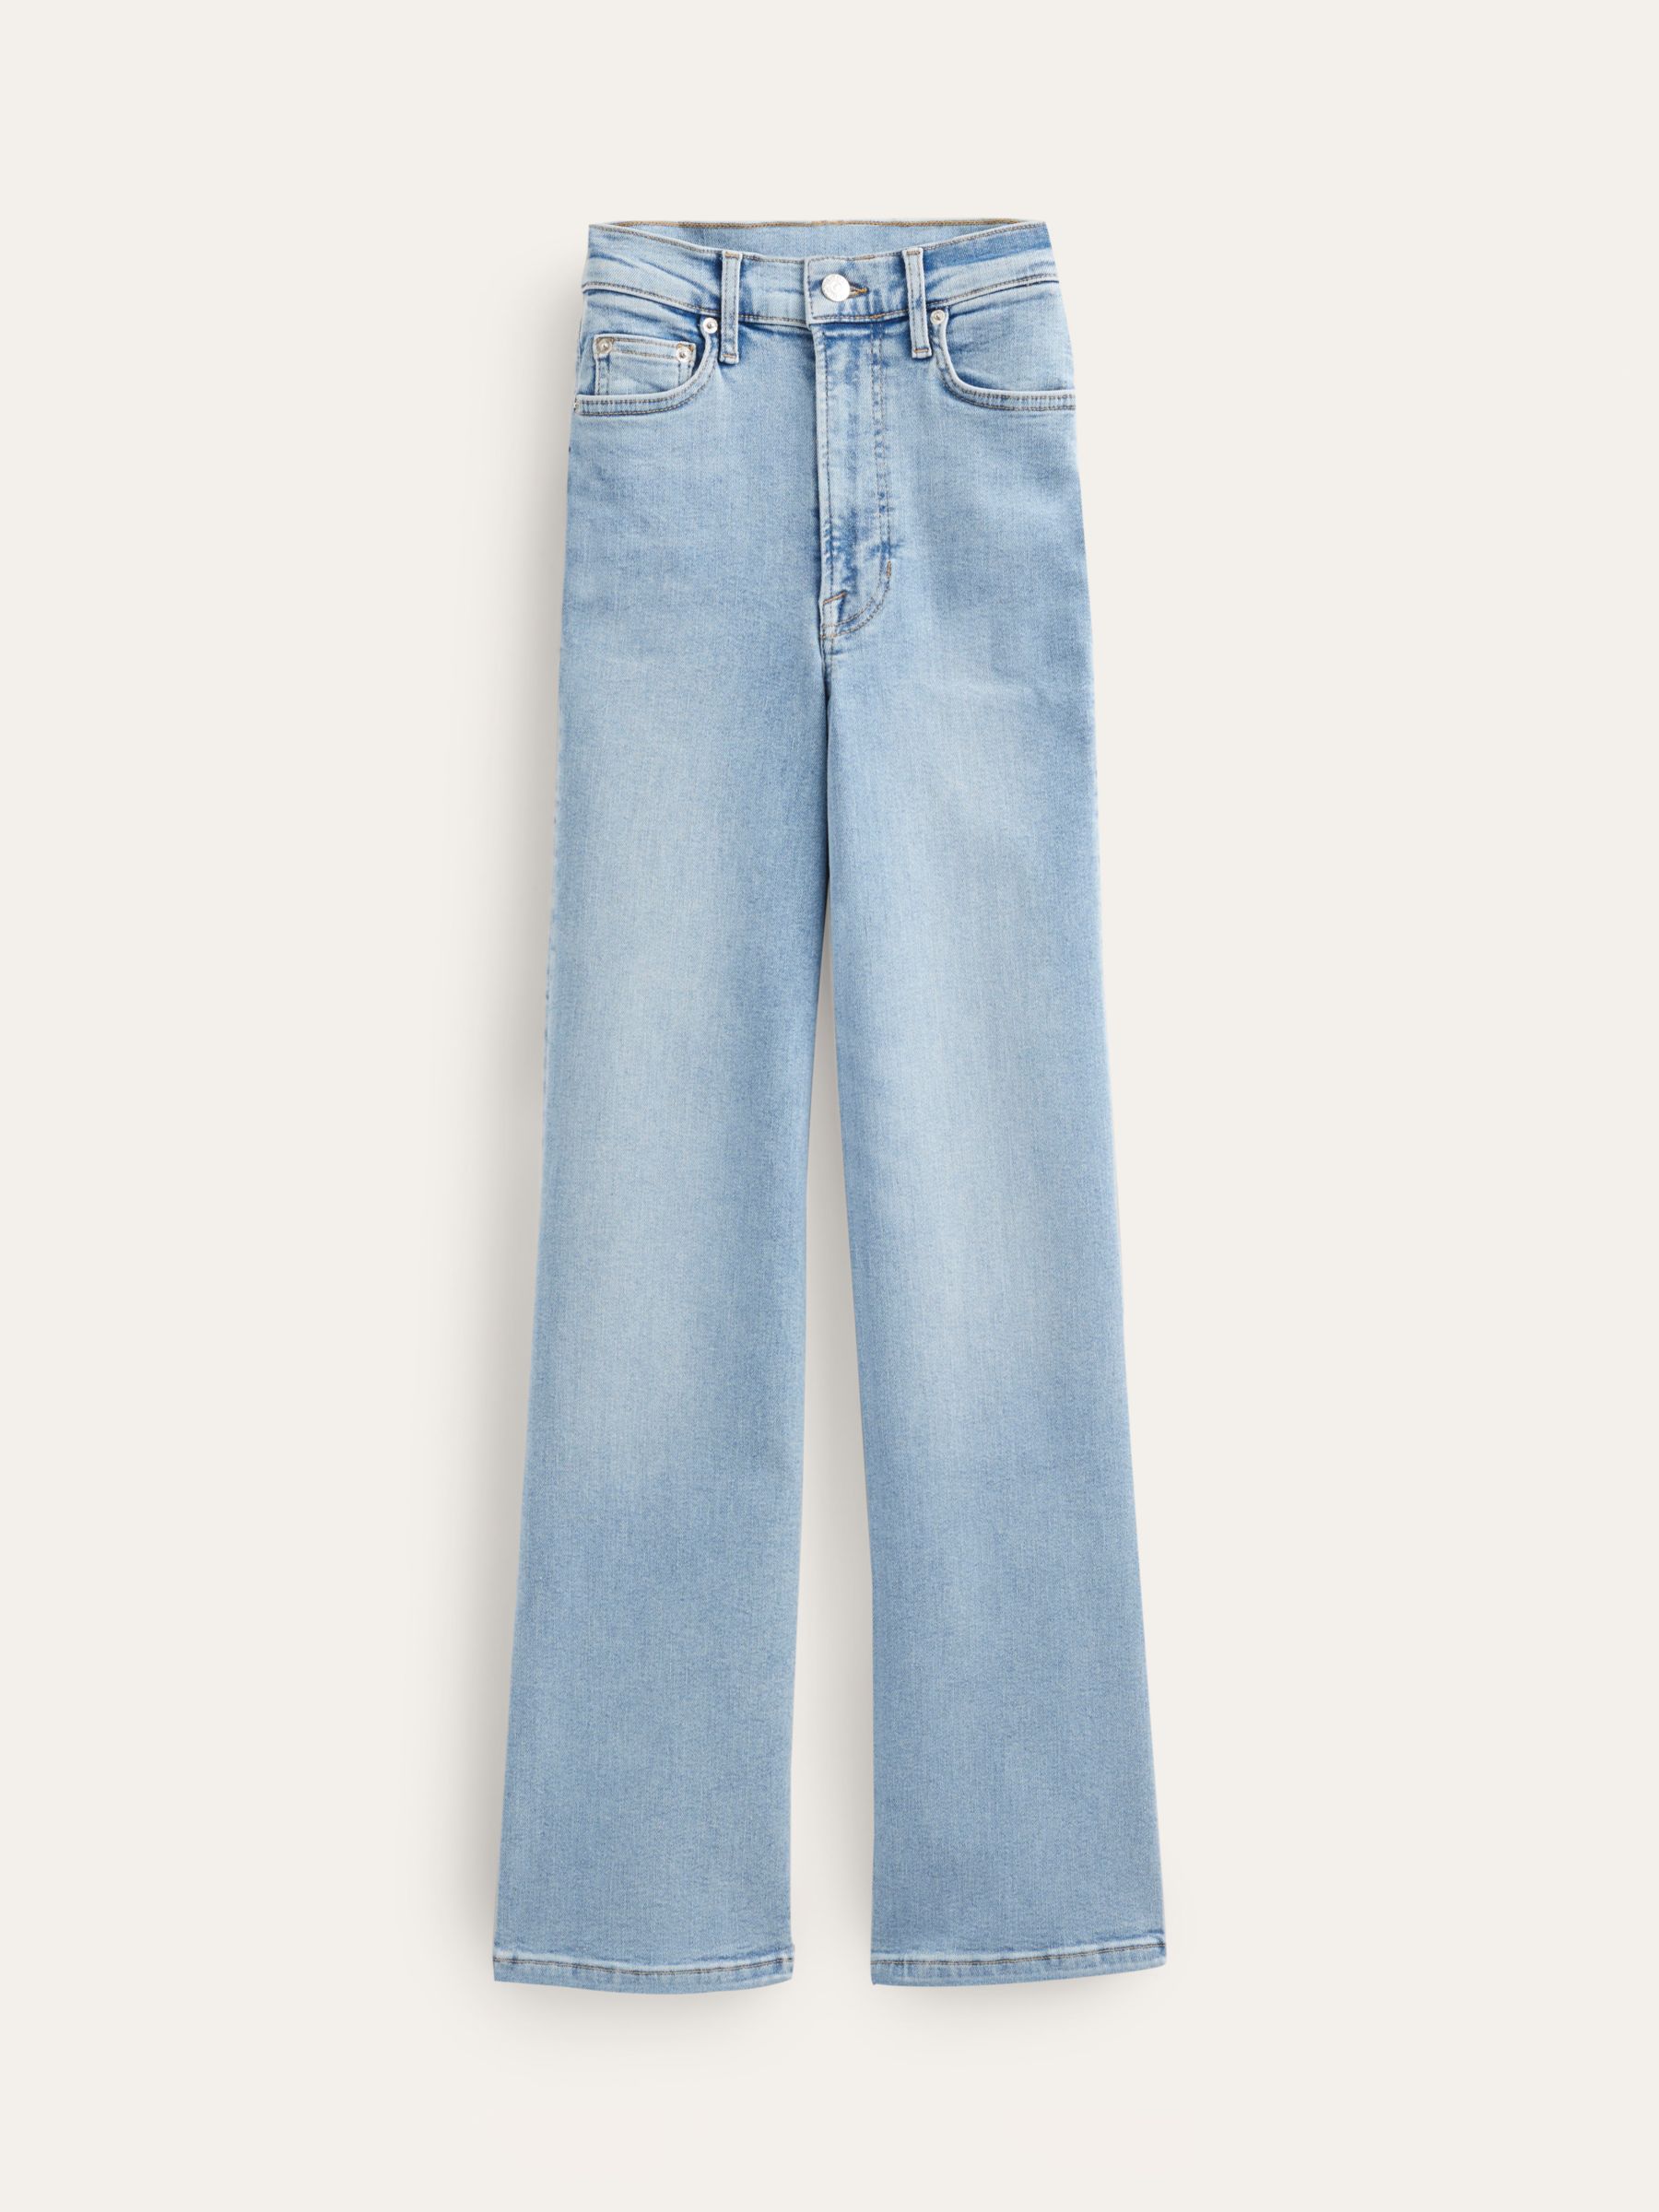 Boden High Rise True Straight Jeans, Light Blue, W26/L32